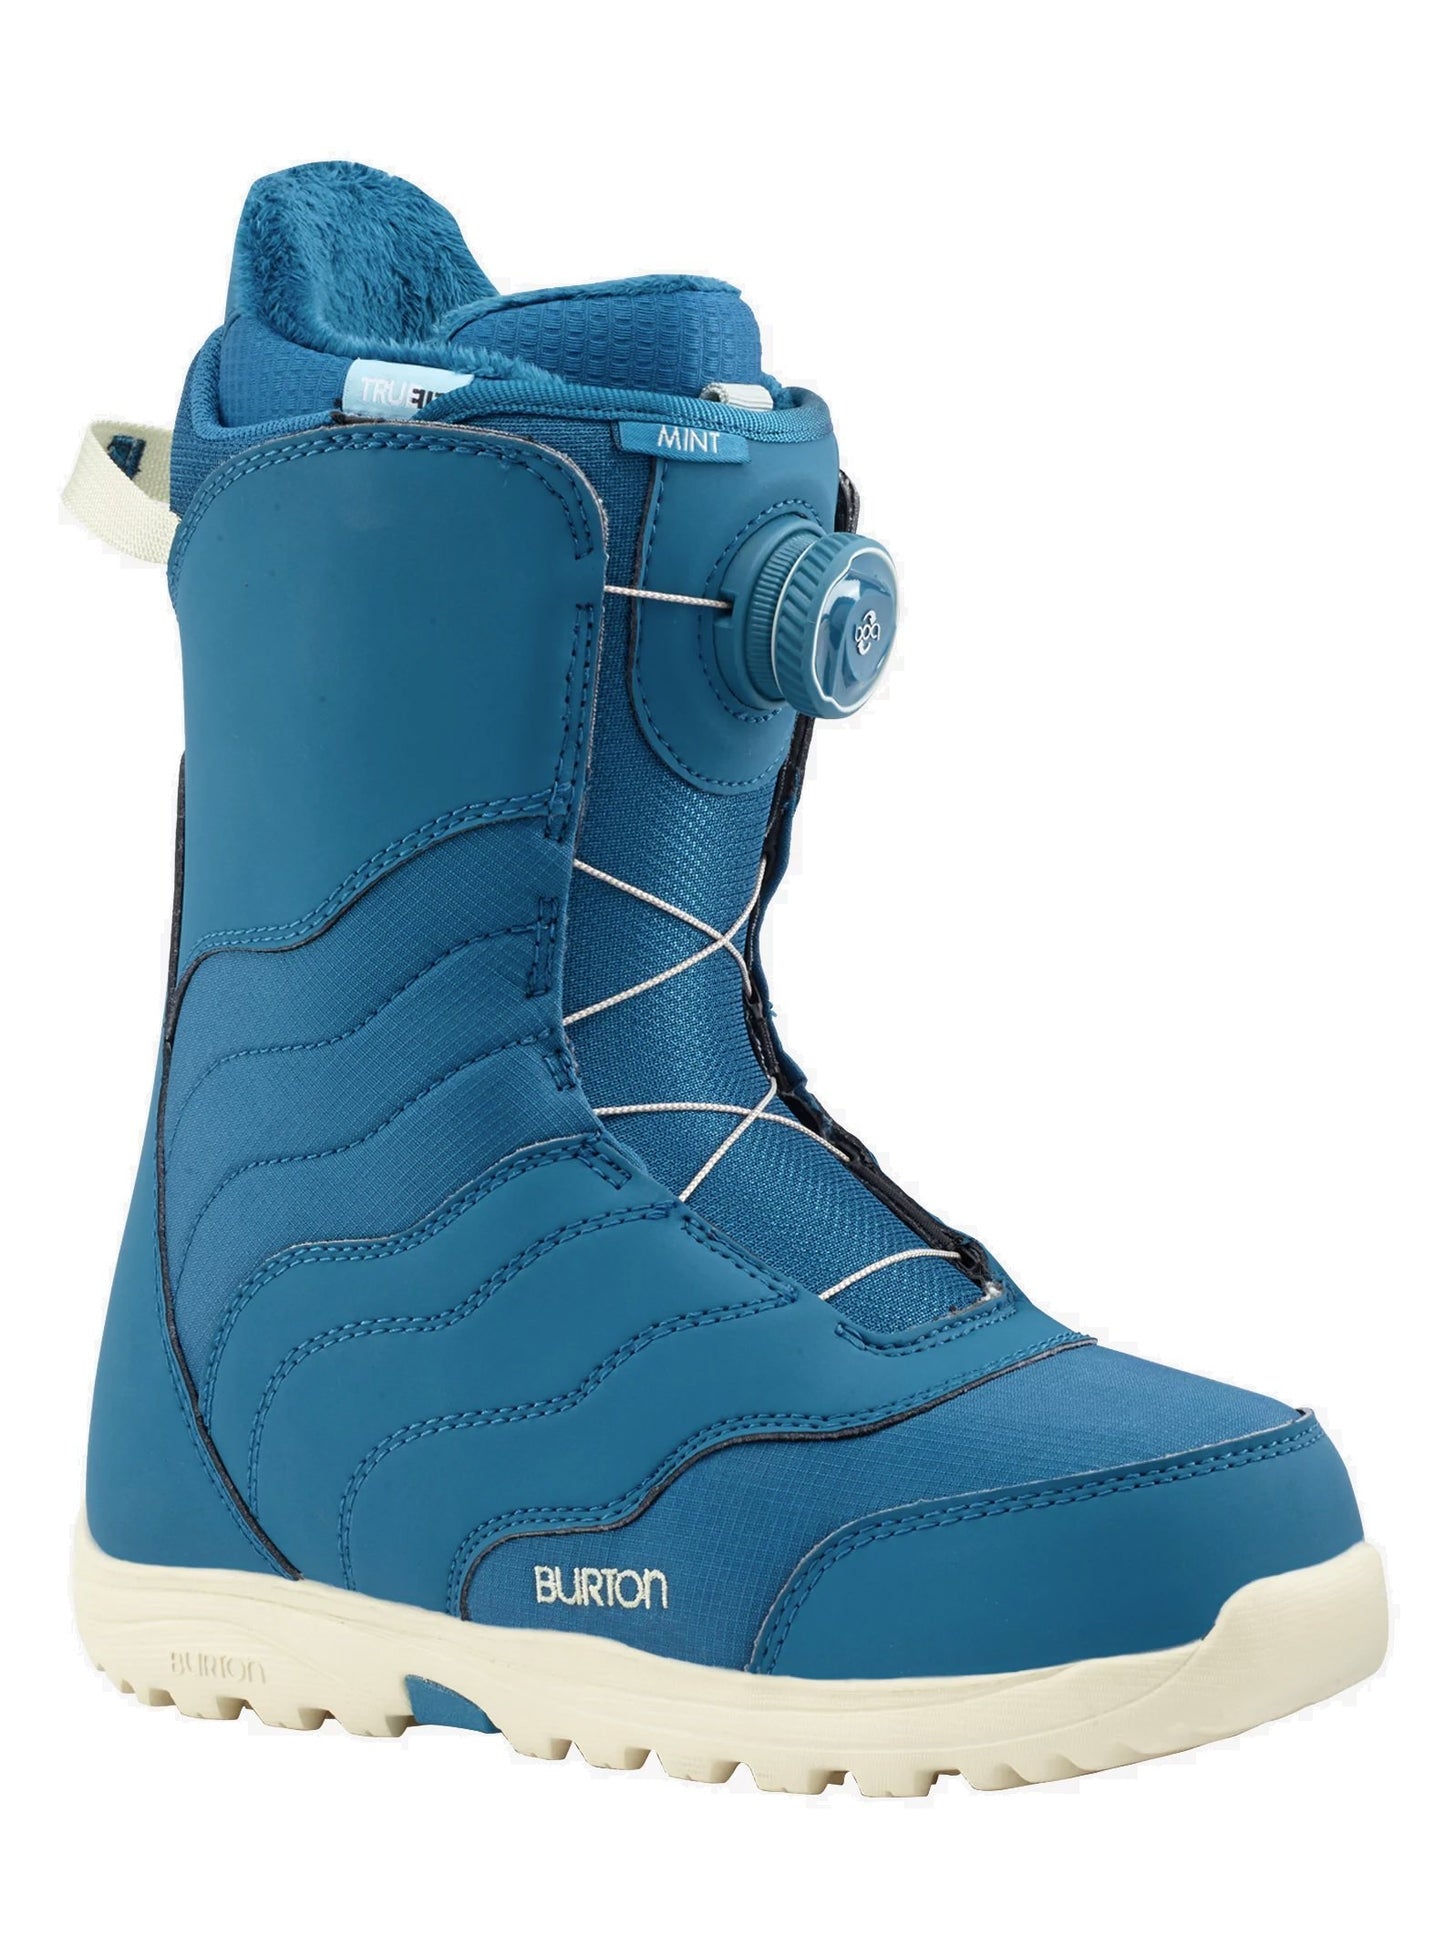 Burton Mint BOA Ladies Snowboard Boots 2018